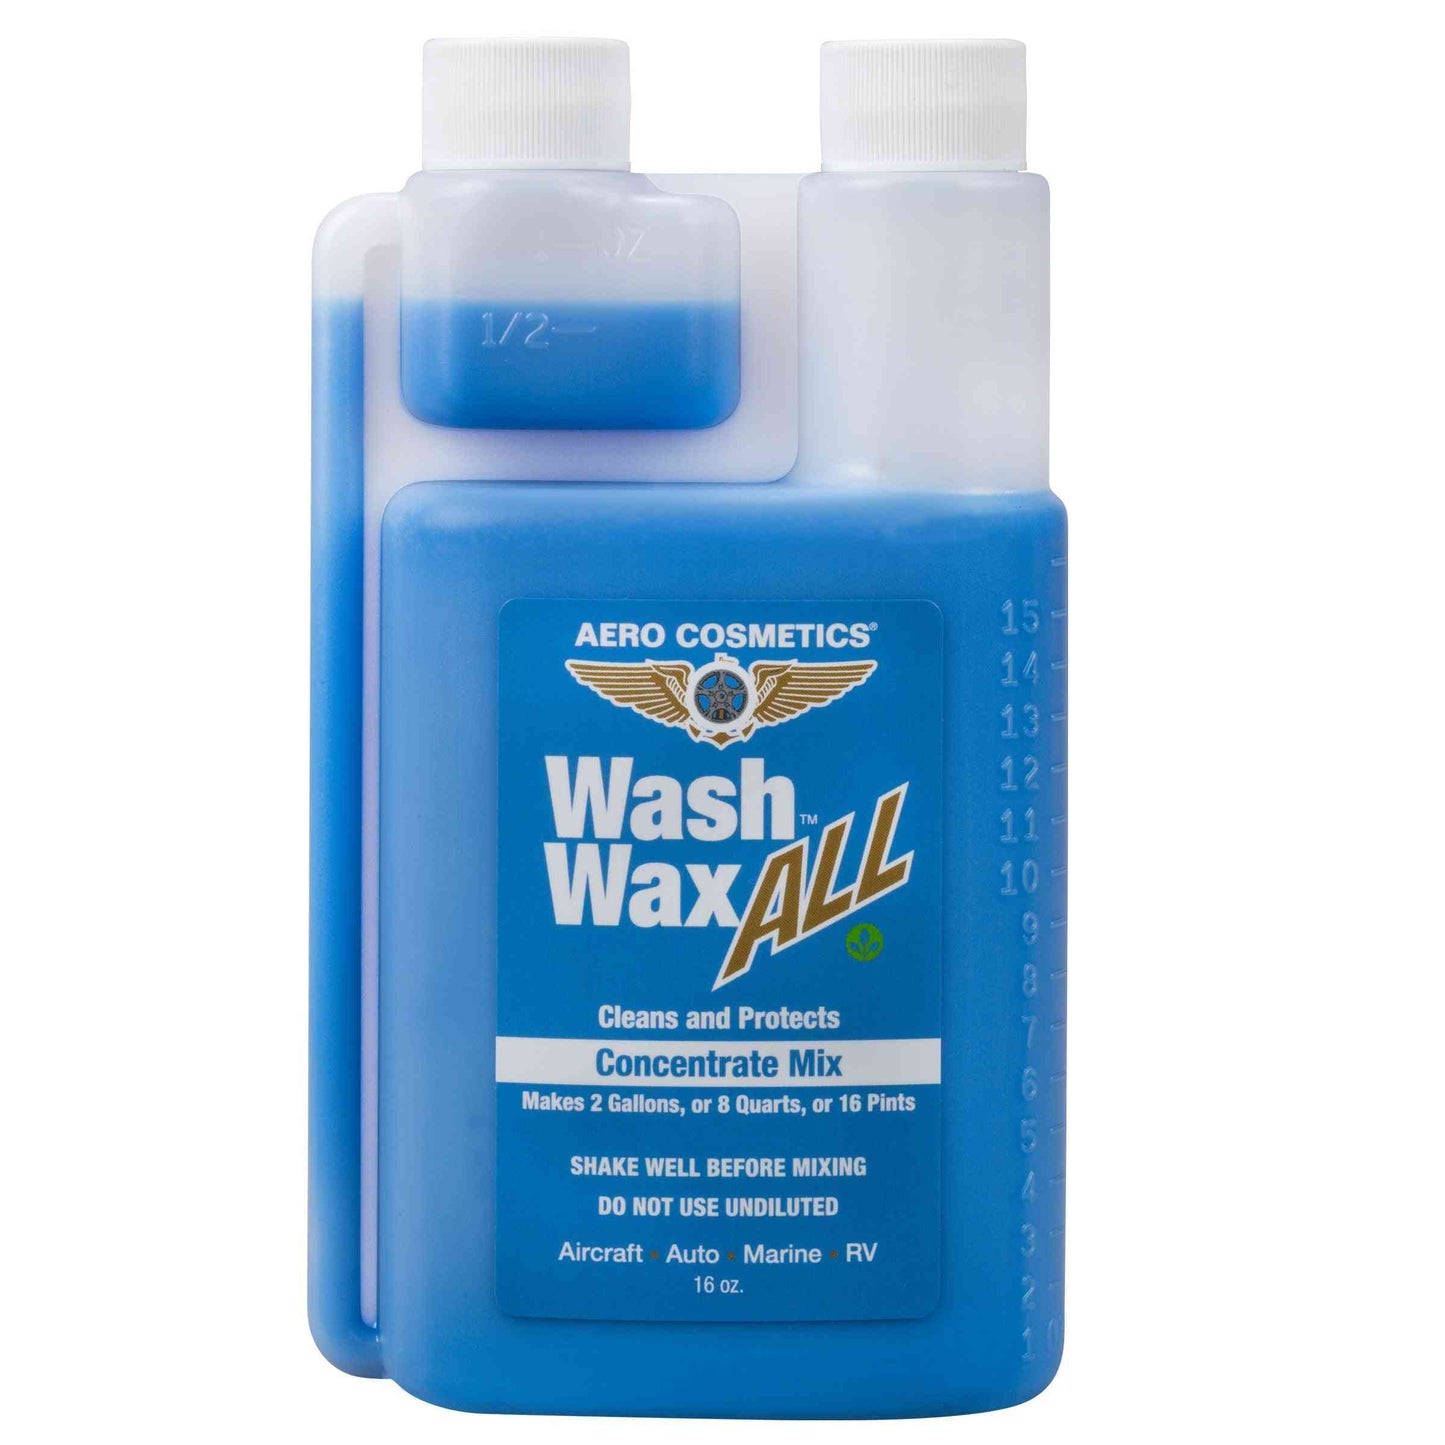 Wash Wax ALL Concentrate 16oz = 2 Gallons 777Cg2 Aero Cosmetics 